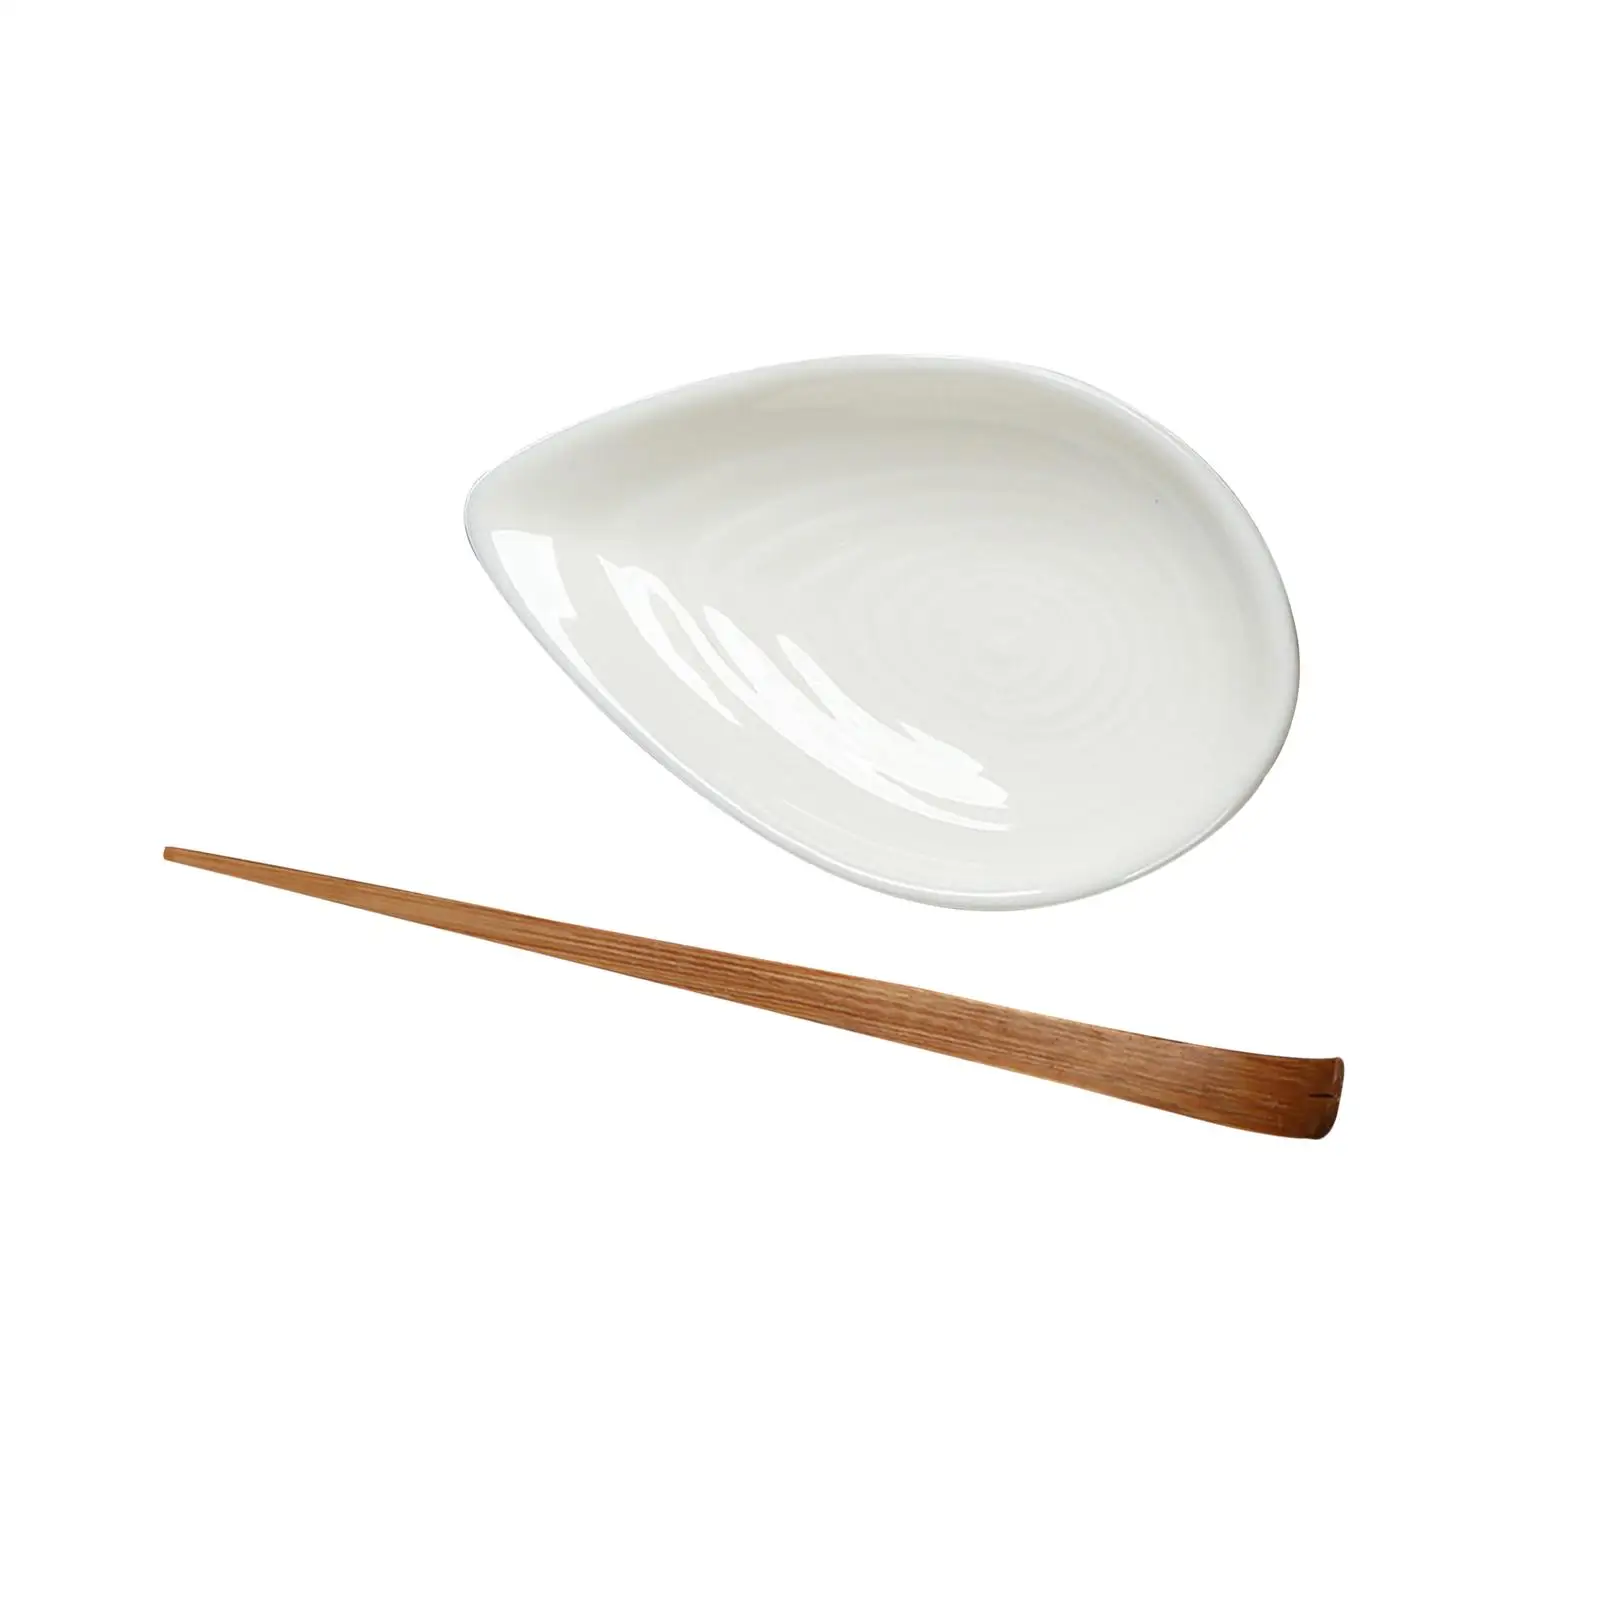 Ceramic Tea Spoon Shovel Tea Leaf Measure Spoon Durable Teaspoon Rest Traditional for Home Tea Room Tea Ceremony Kitchen Indoor